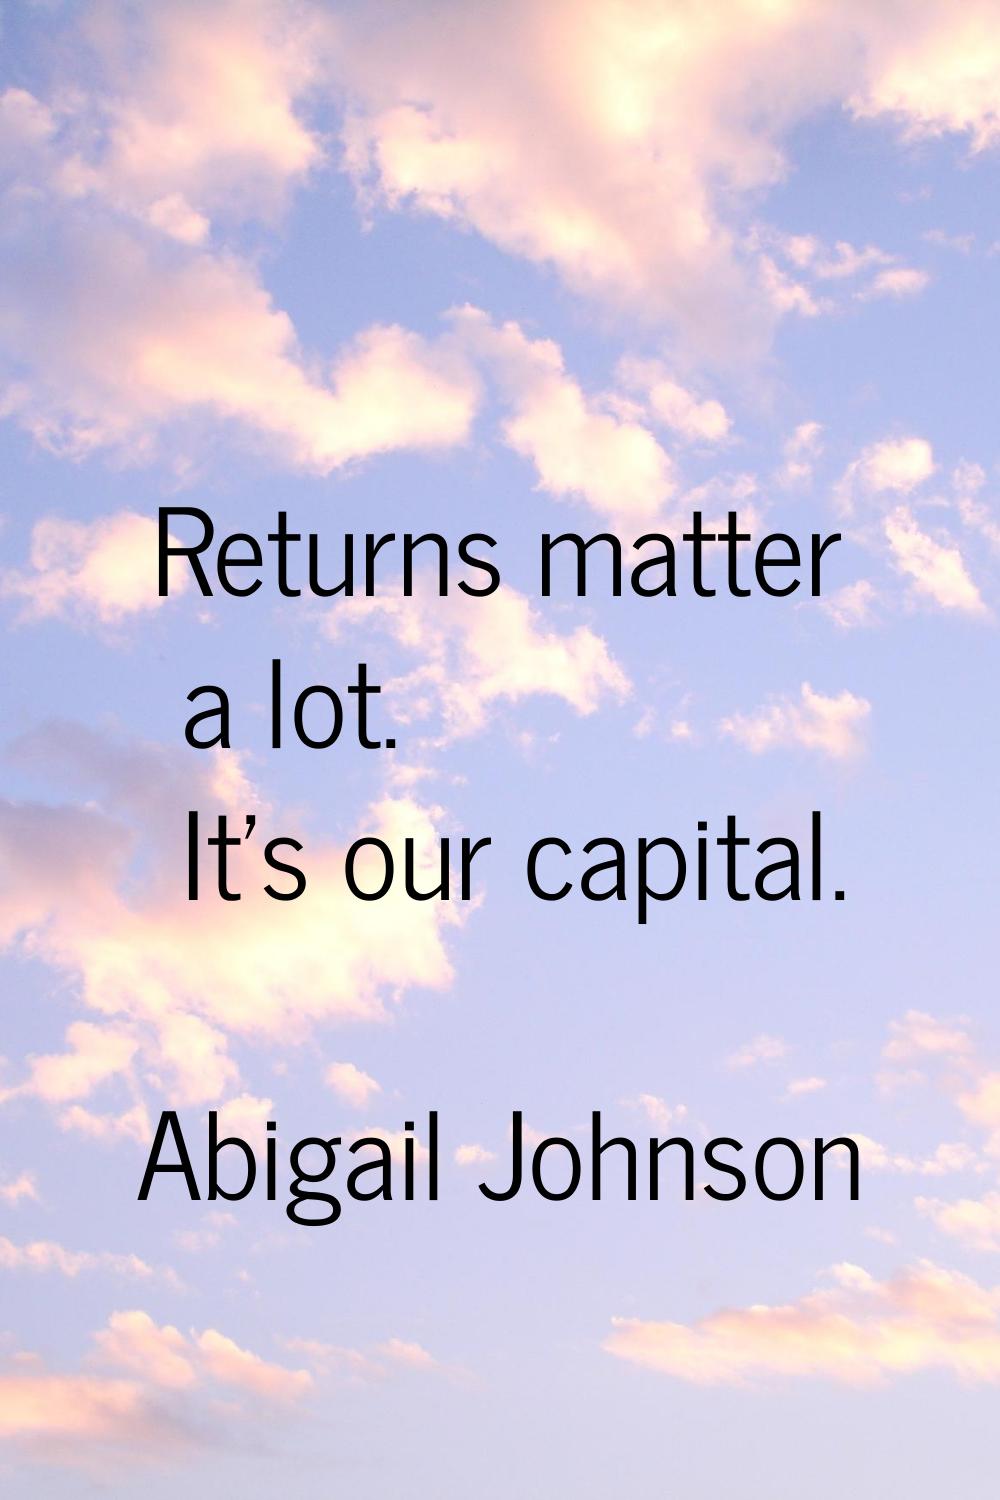 Returns matter a lot. It's our capital.